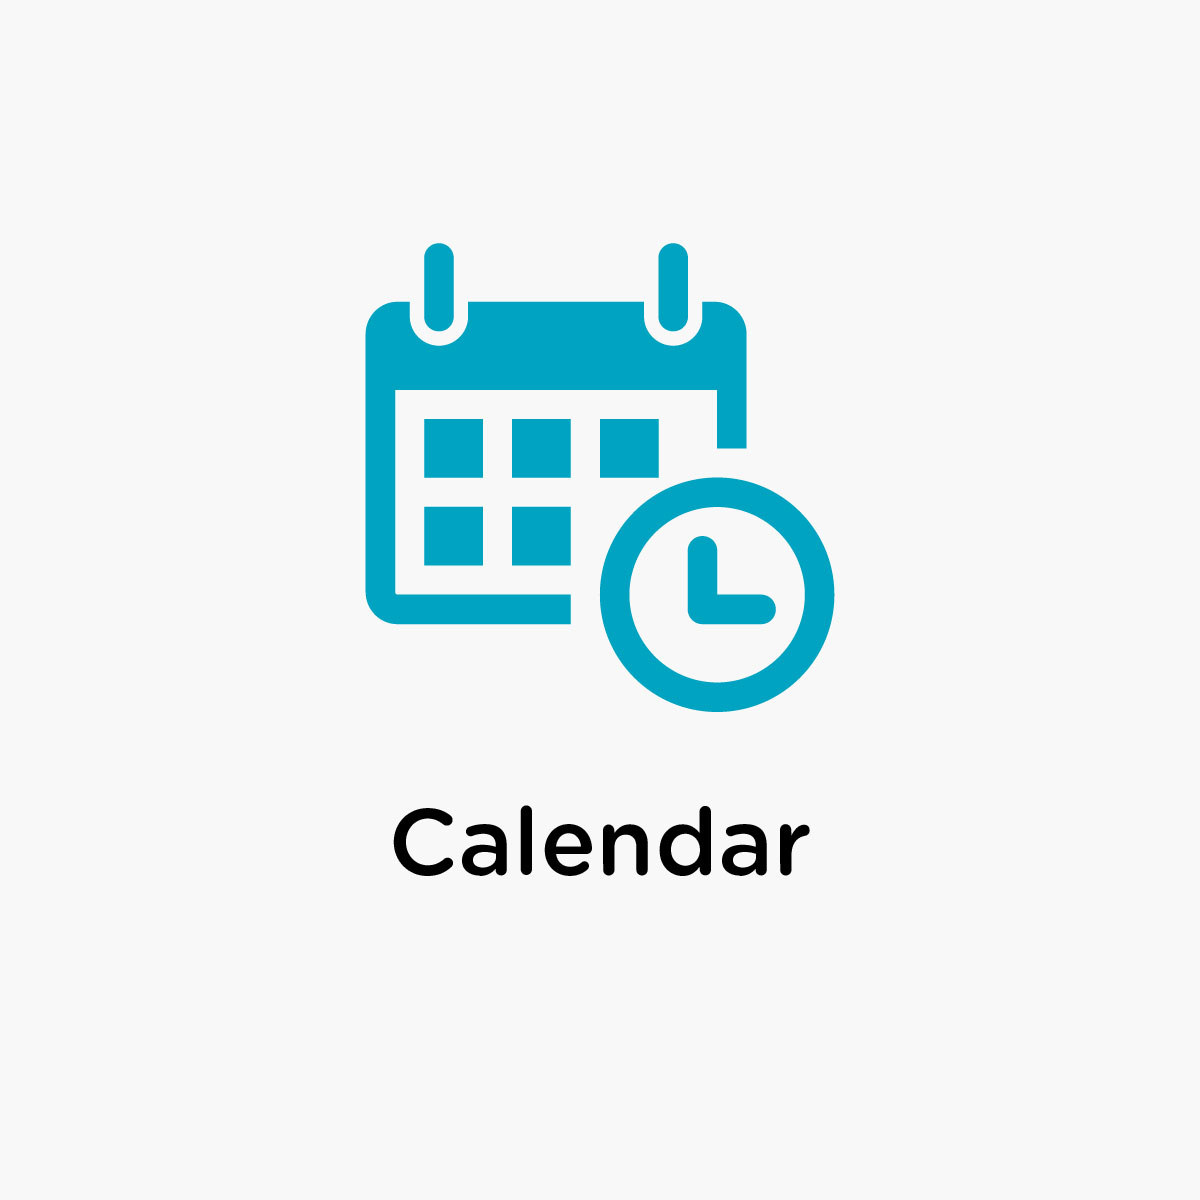 Calendar of Events Archimedean Schools